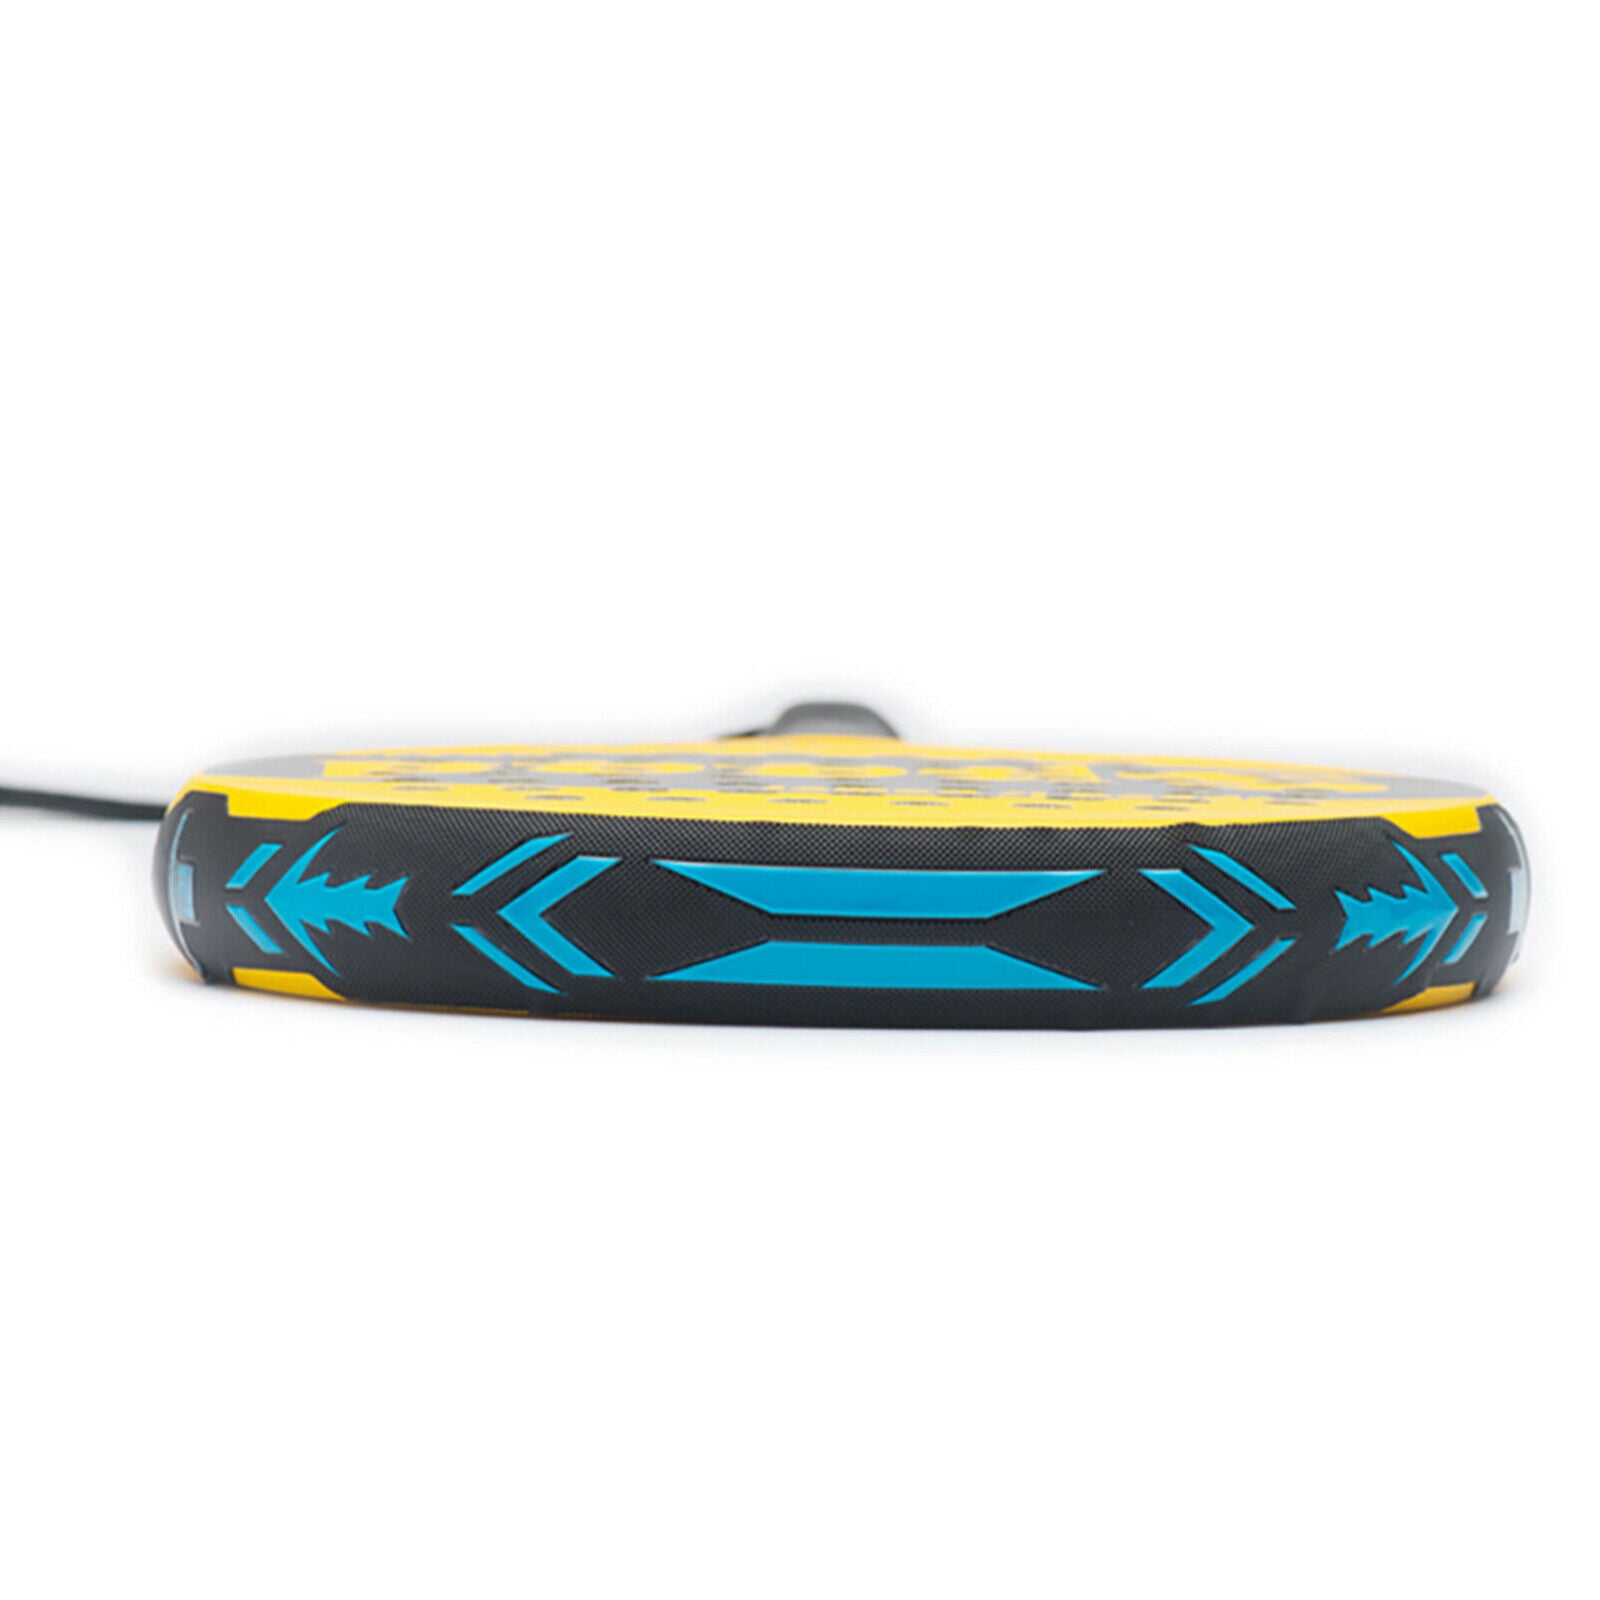 2x Paddle Tennis Tape Soft Head Protector Beach Tennis Racket Outdoor Guard